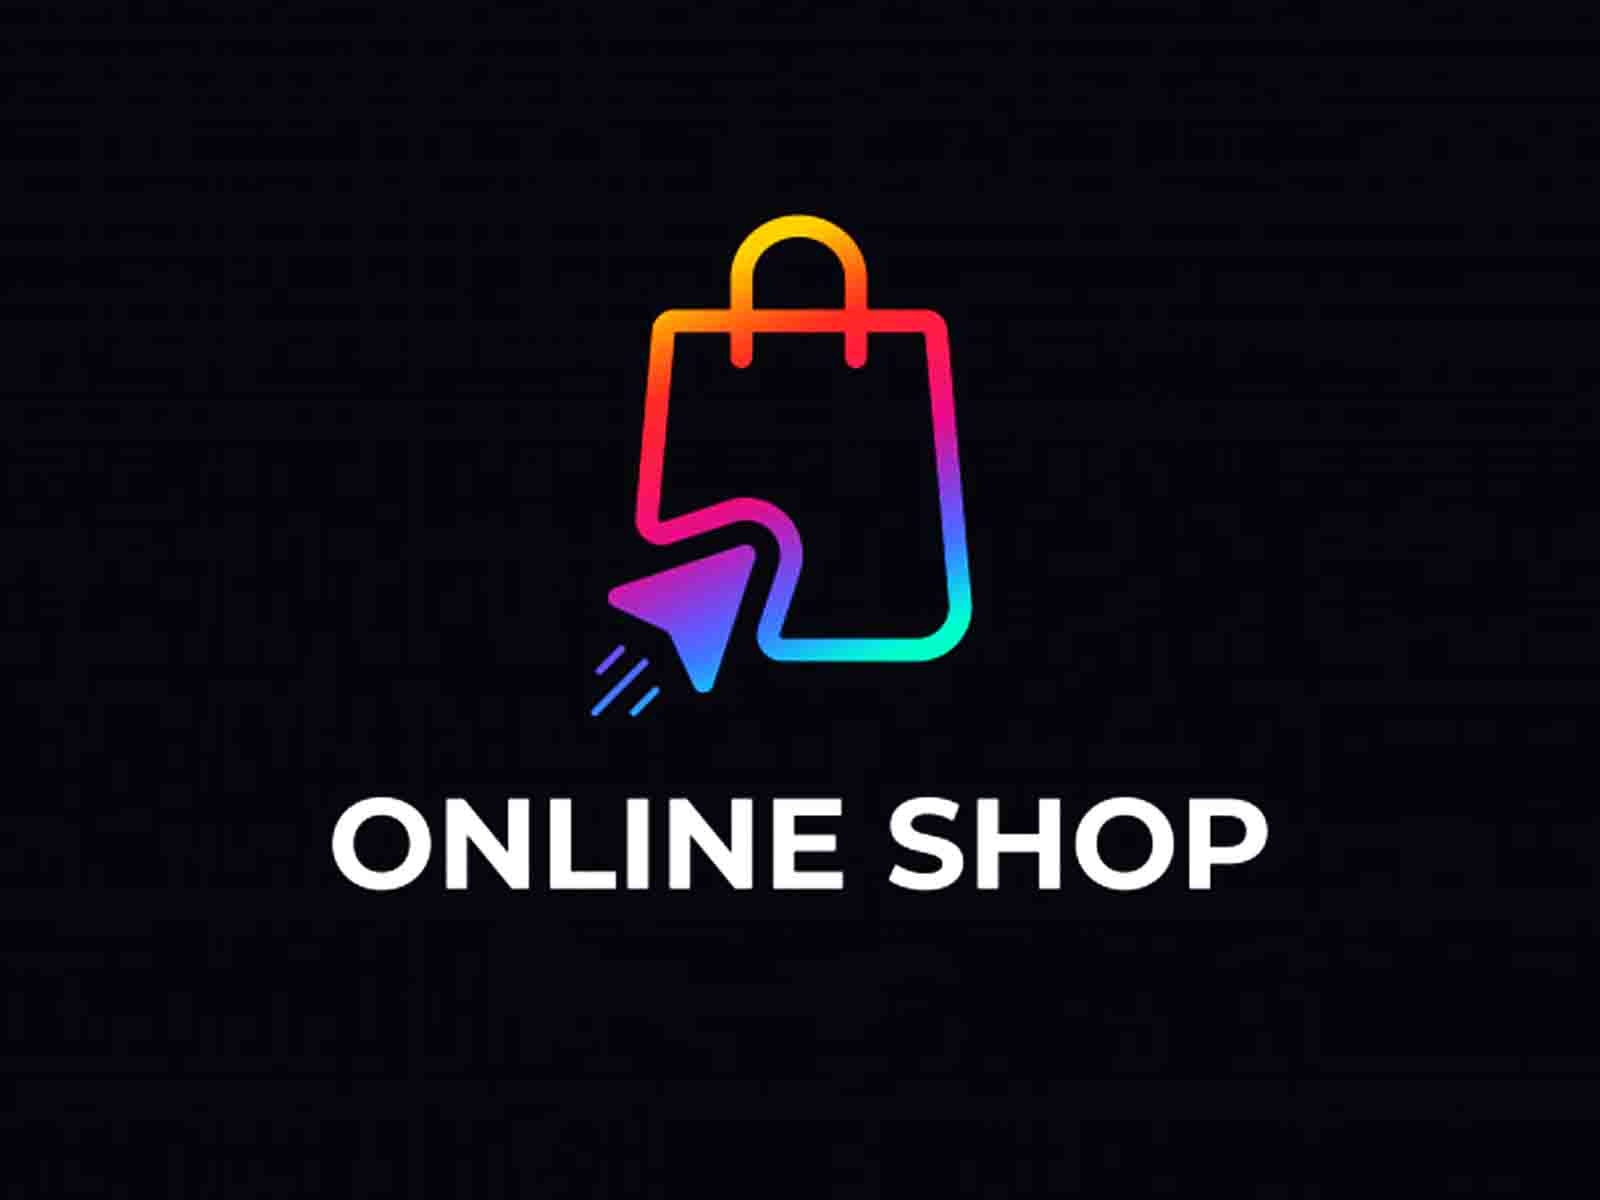 Online Shopping Logo Inspiration